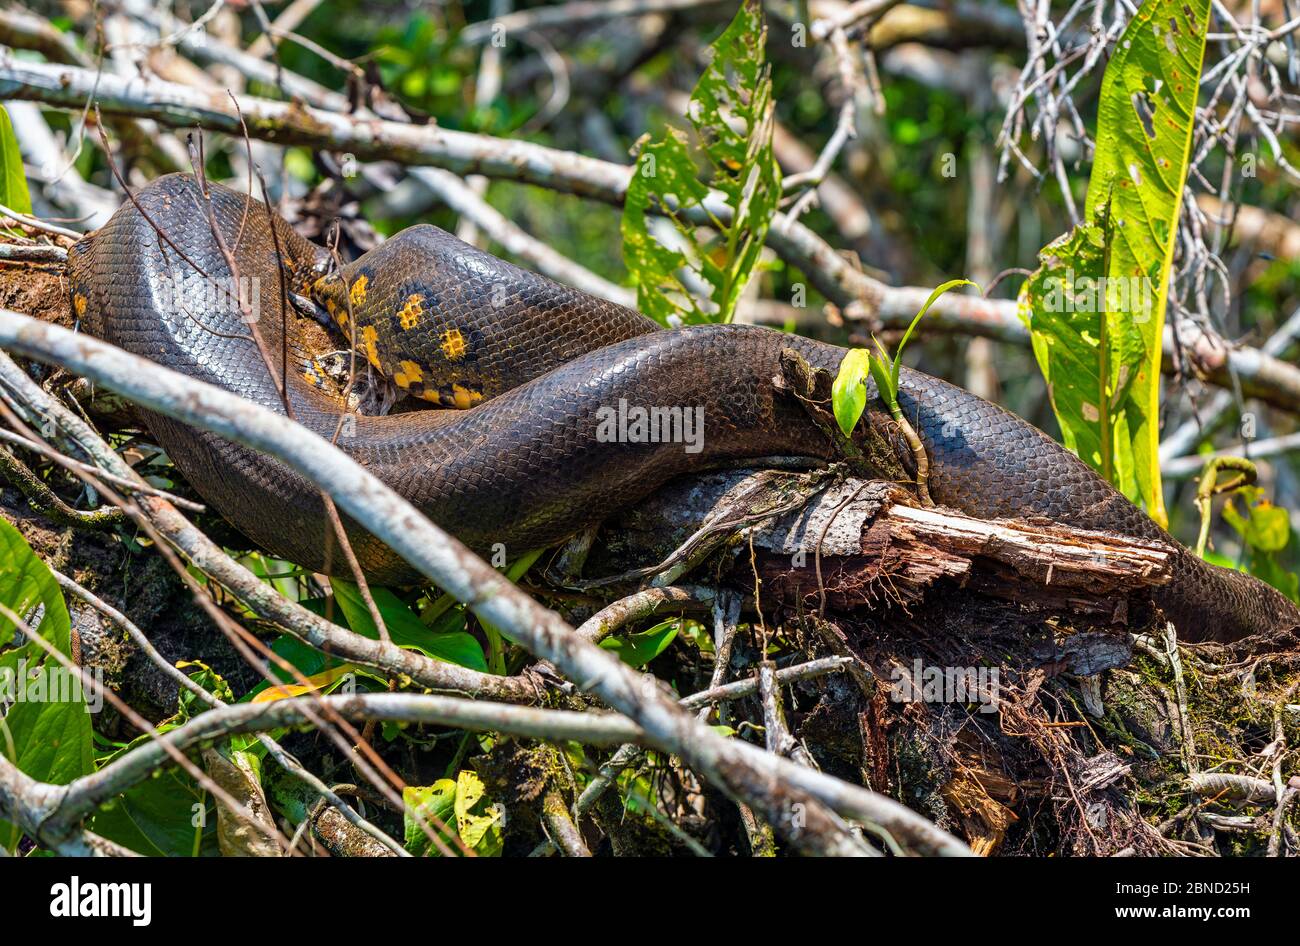 Anaconda skin hi-res stock photography and images - Alamy